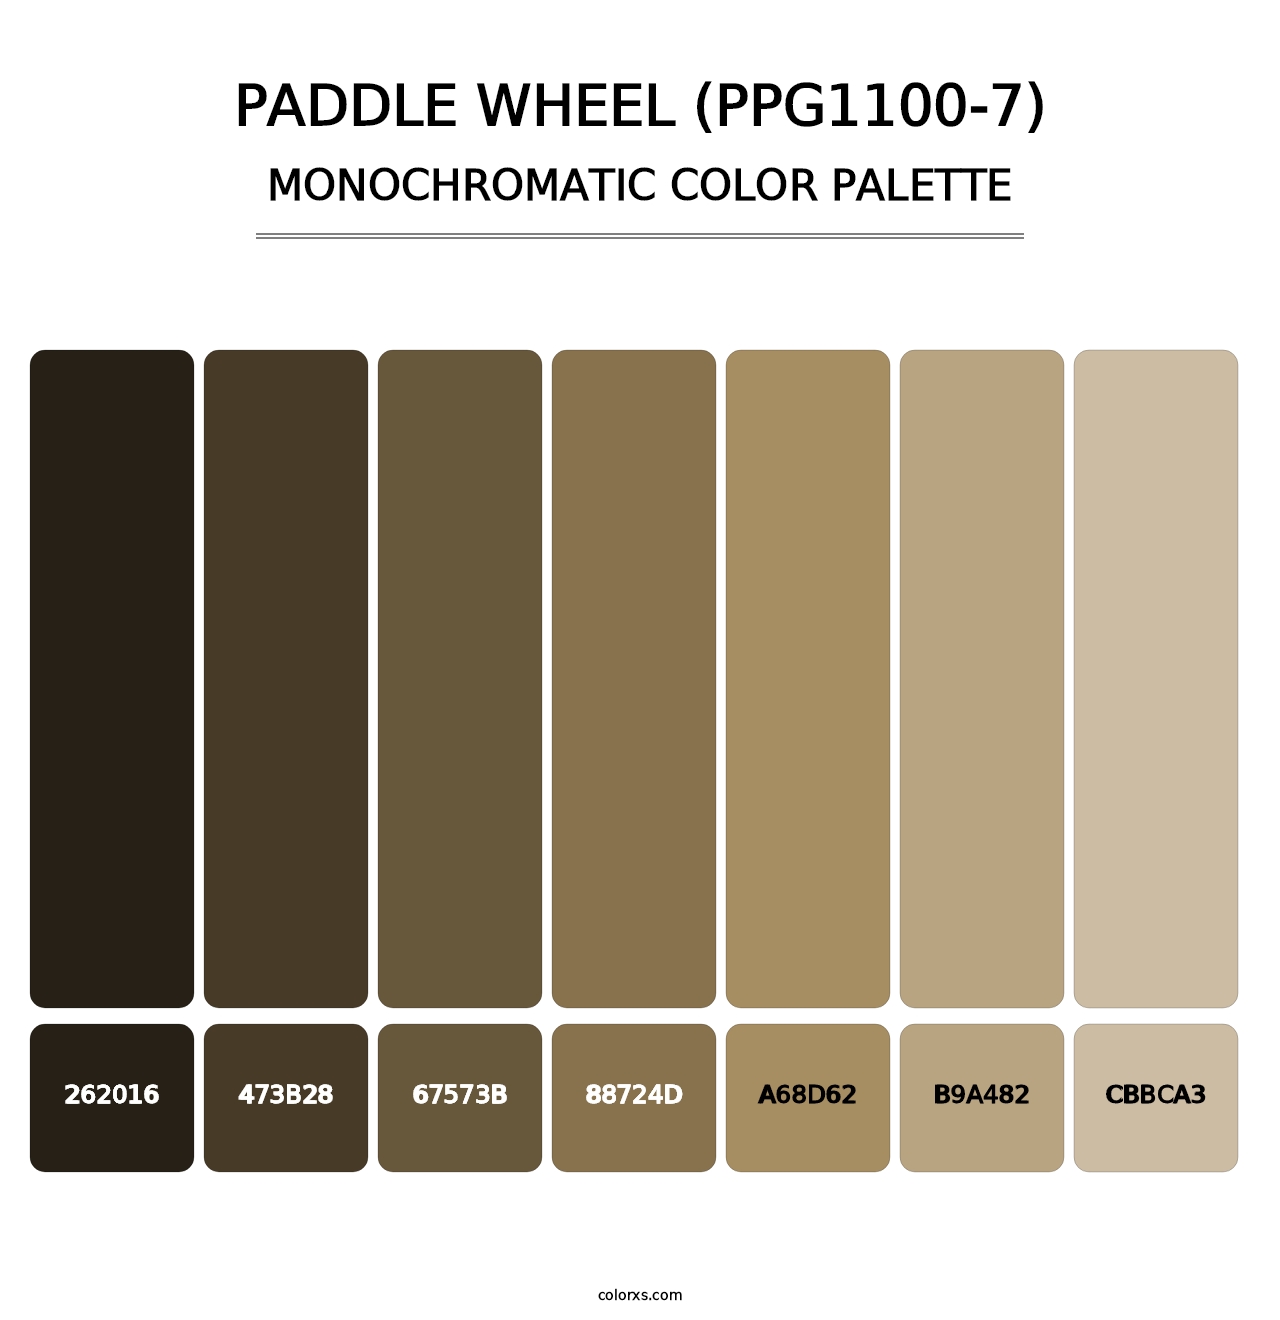 Paddle Wheel (PPG1100-7) - Monochromatic Color Palette